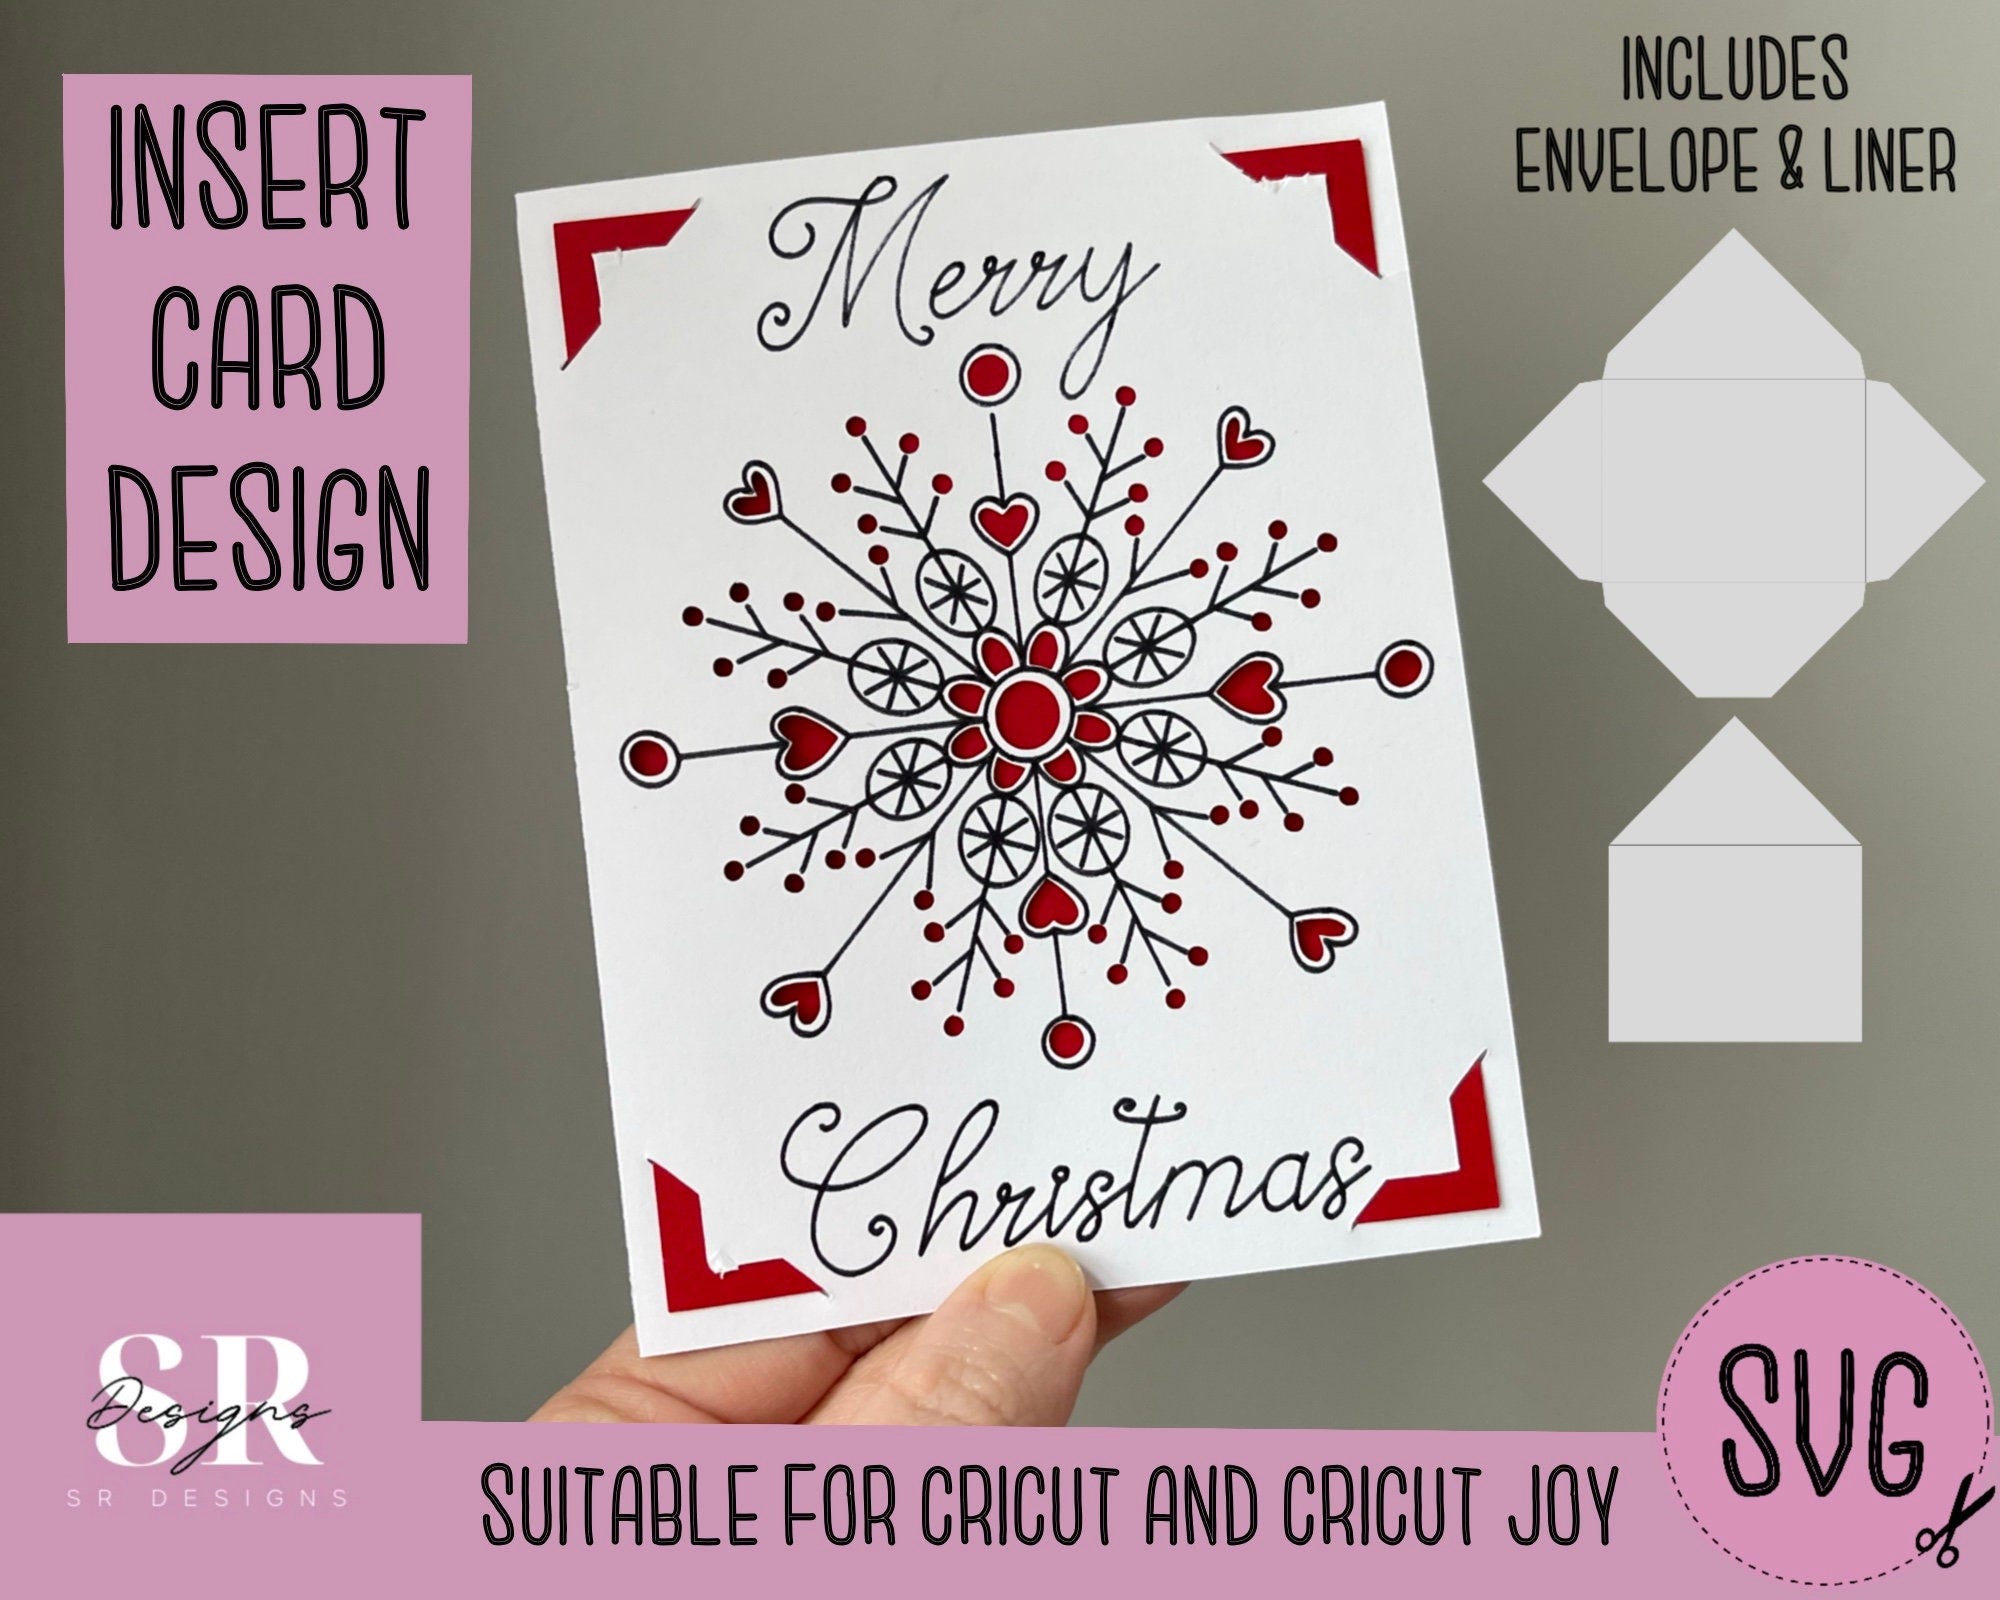 SVG: Christmas insert card. Cricut Joy friendly. Draw and cut card design. Envelope template included. Cricut Joy Christmas card SVG